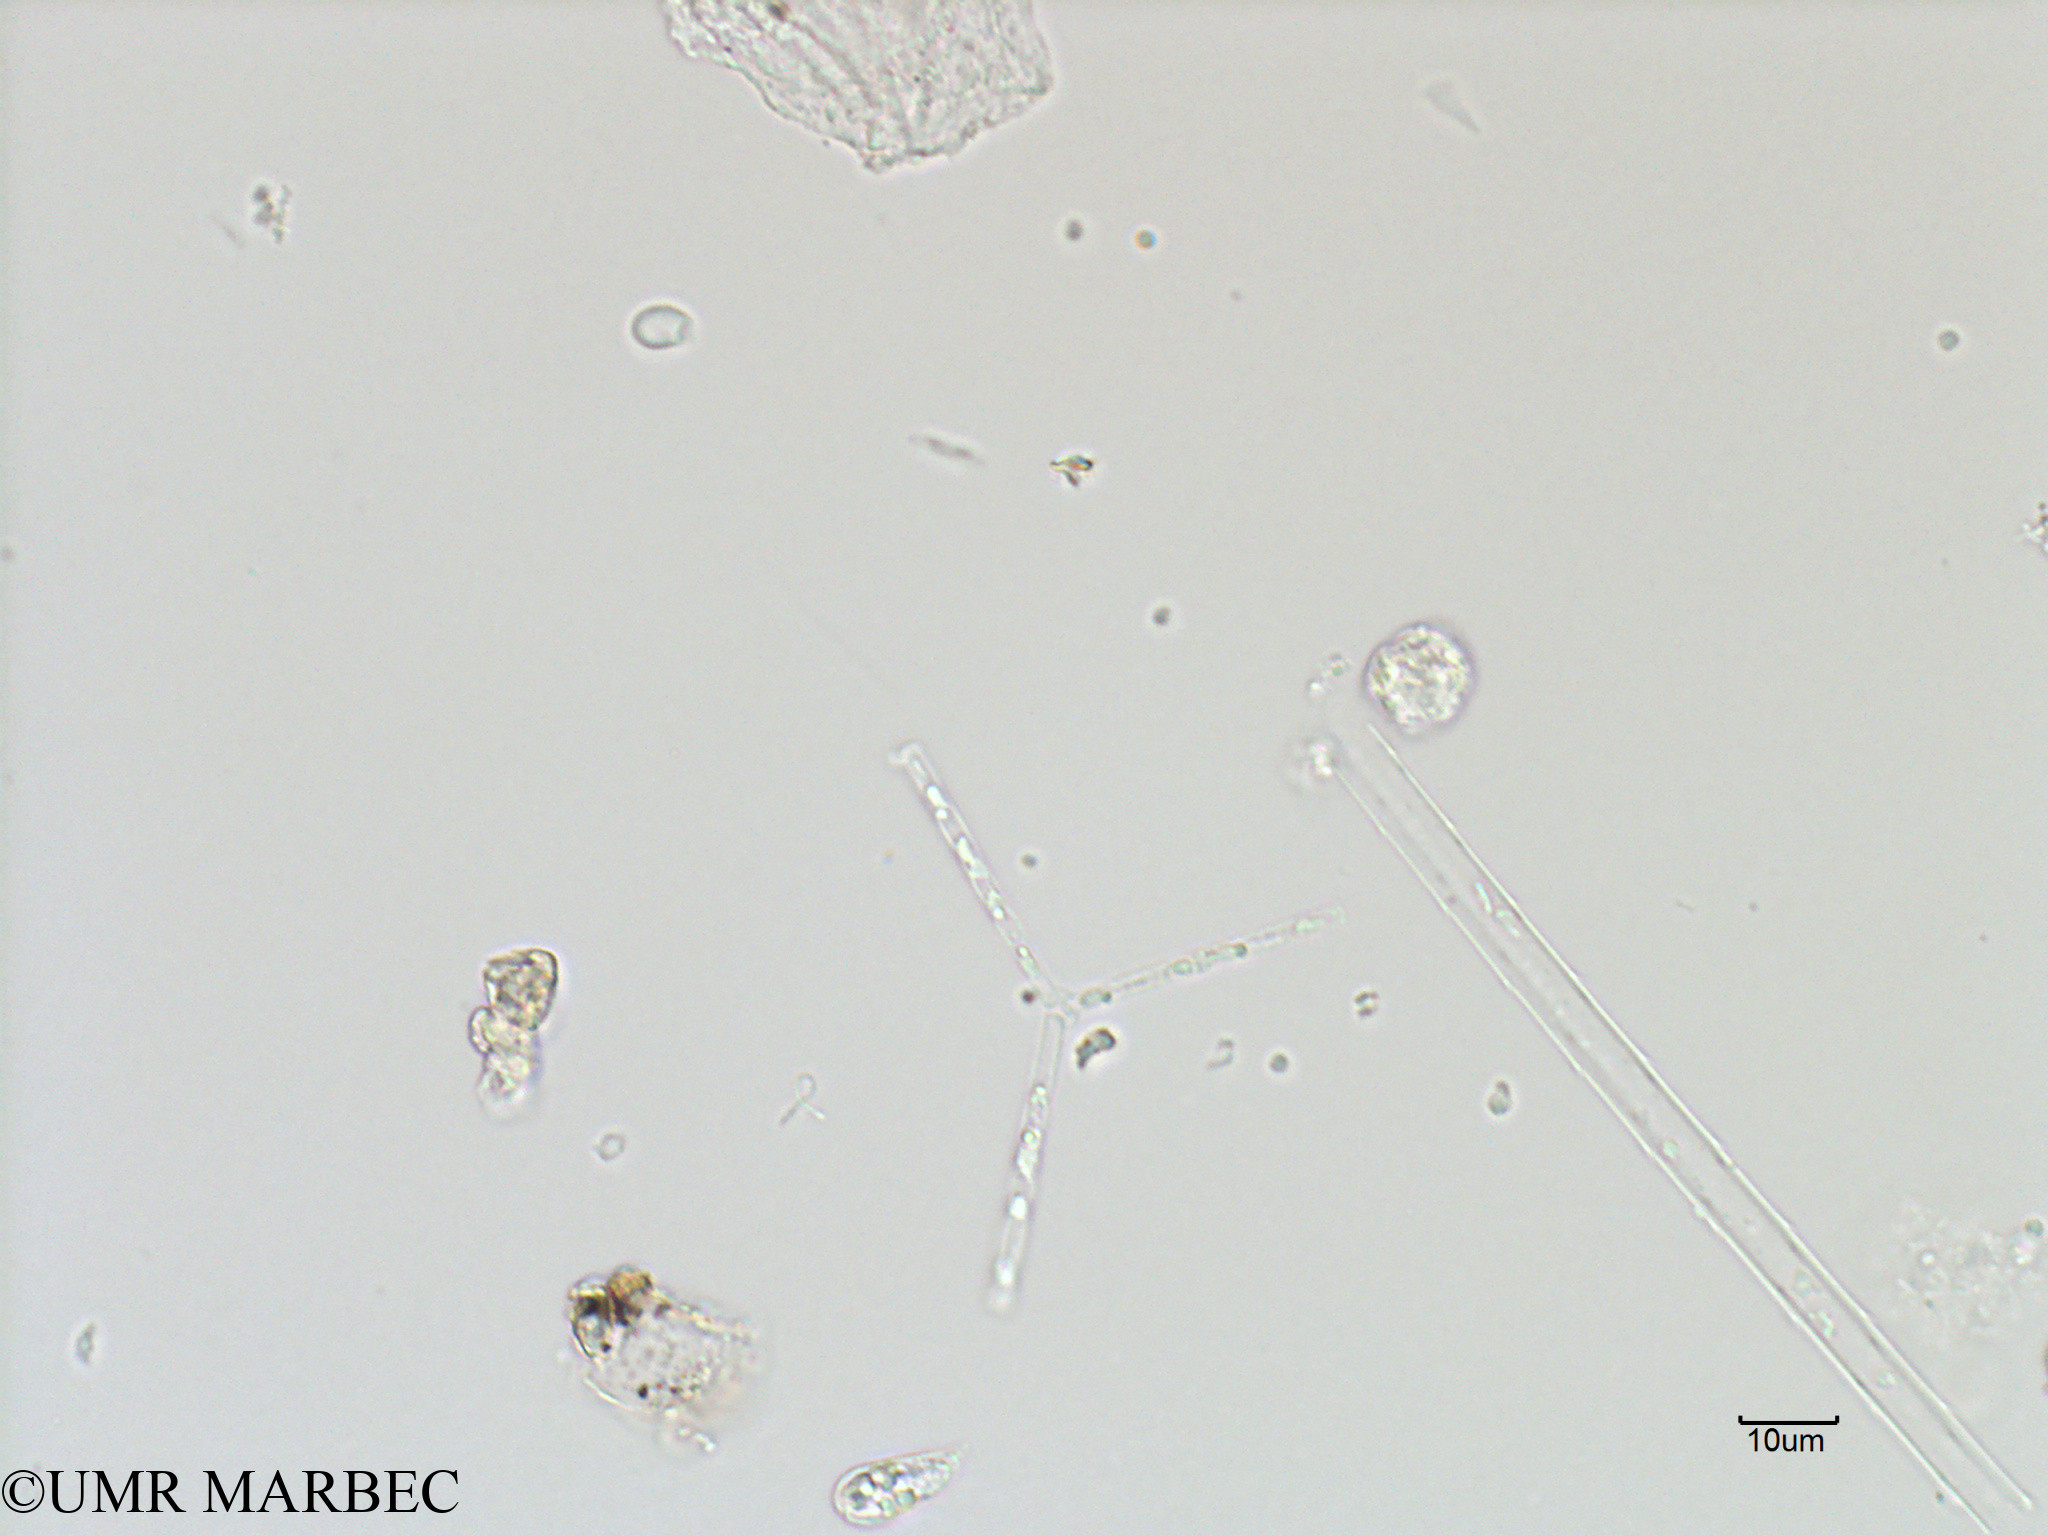 phyto/French_Polynesia/Arutua/ECOPE Janvier 2017/Thalassionema sp3 cf nitzschioides (sp1 -C1A_S1R2_050117).tif(copy).jpg